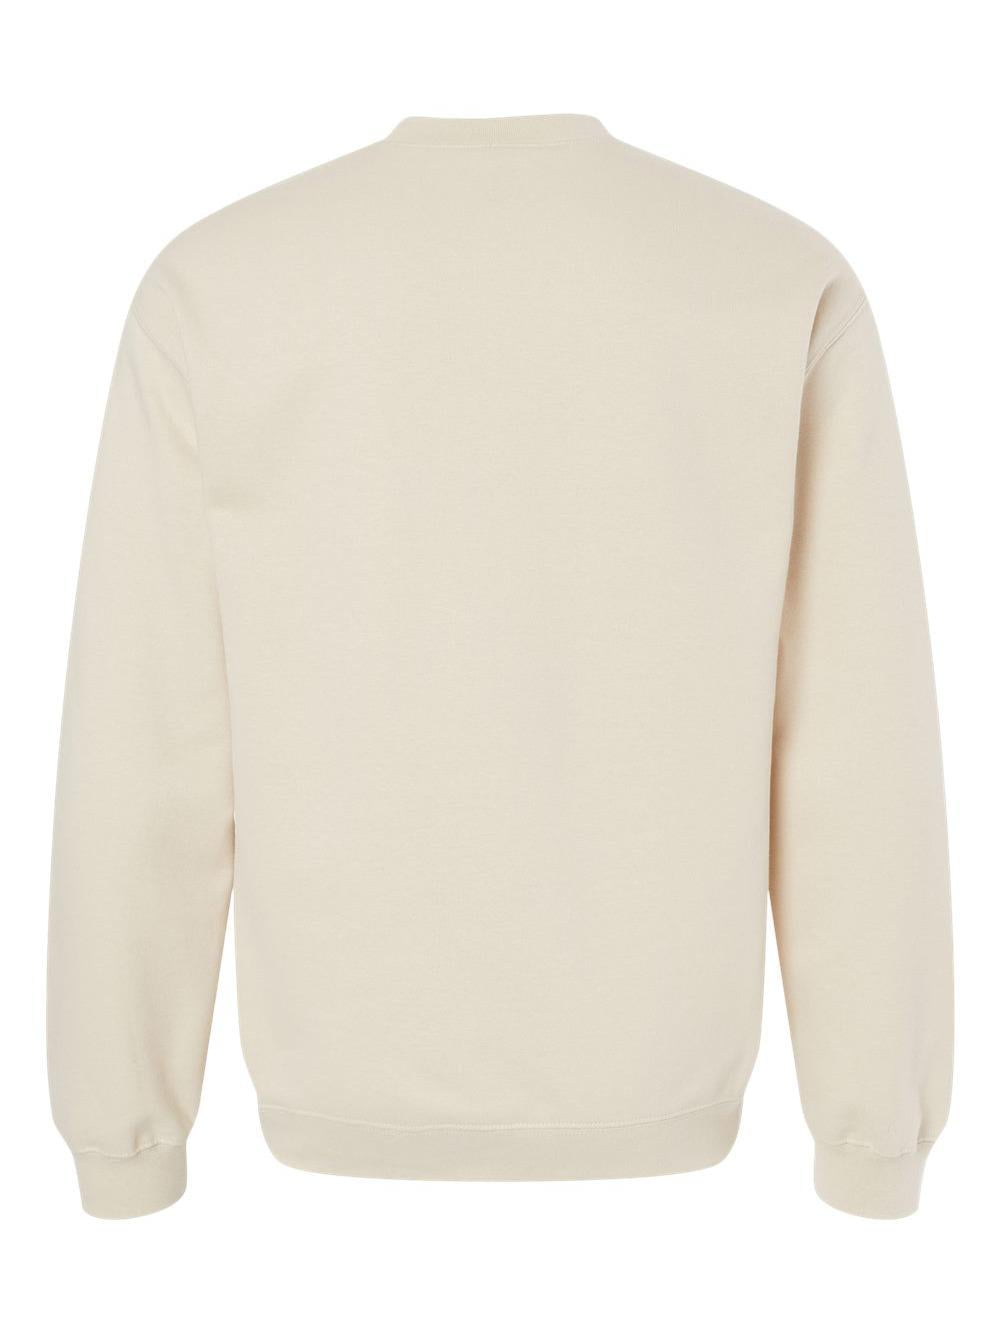 Gildan - Softstyle Crewneck Sweatshirt - SF000 - Sand - Size: 4XL 